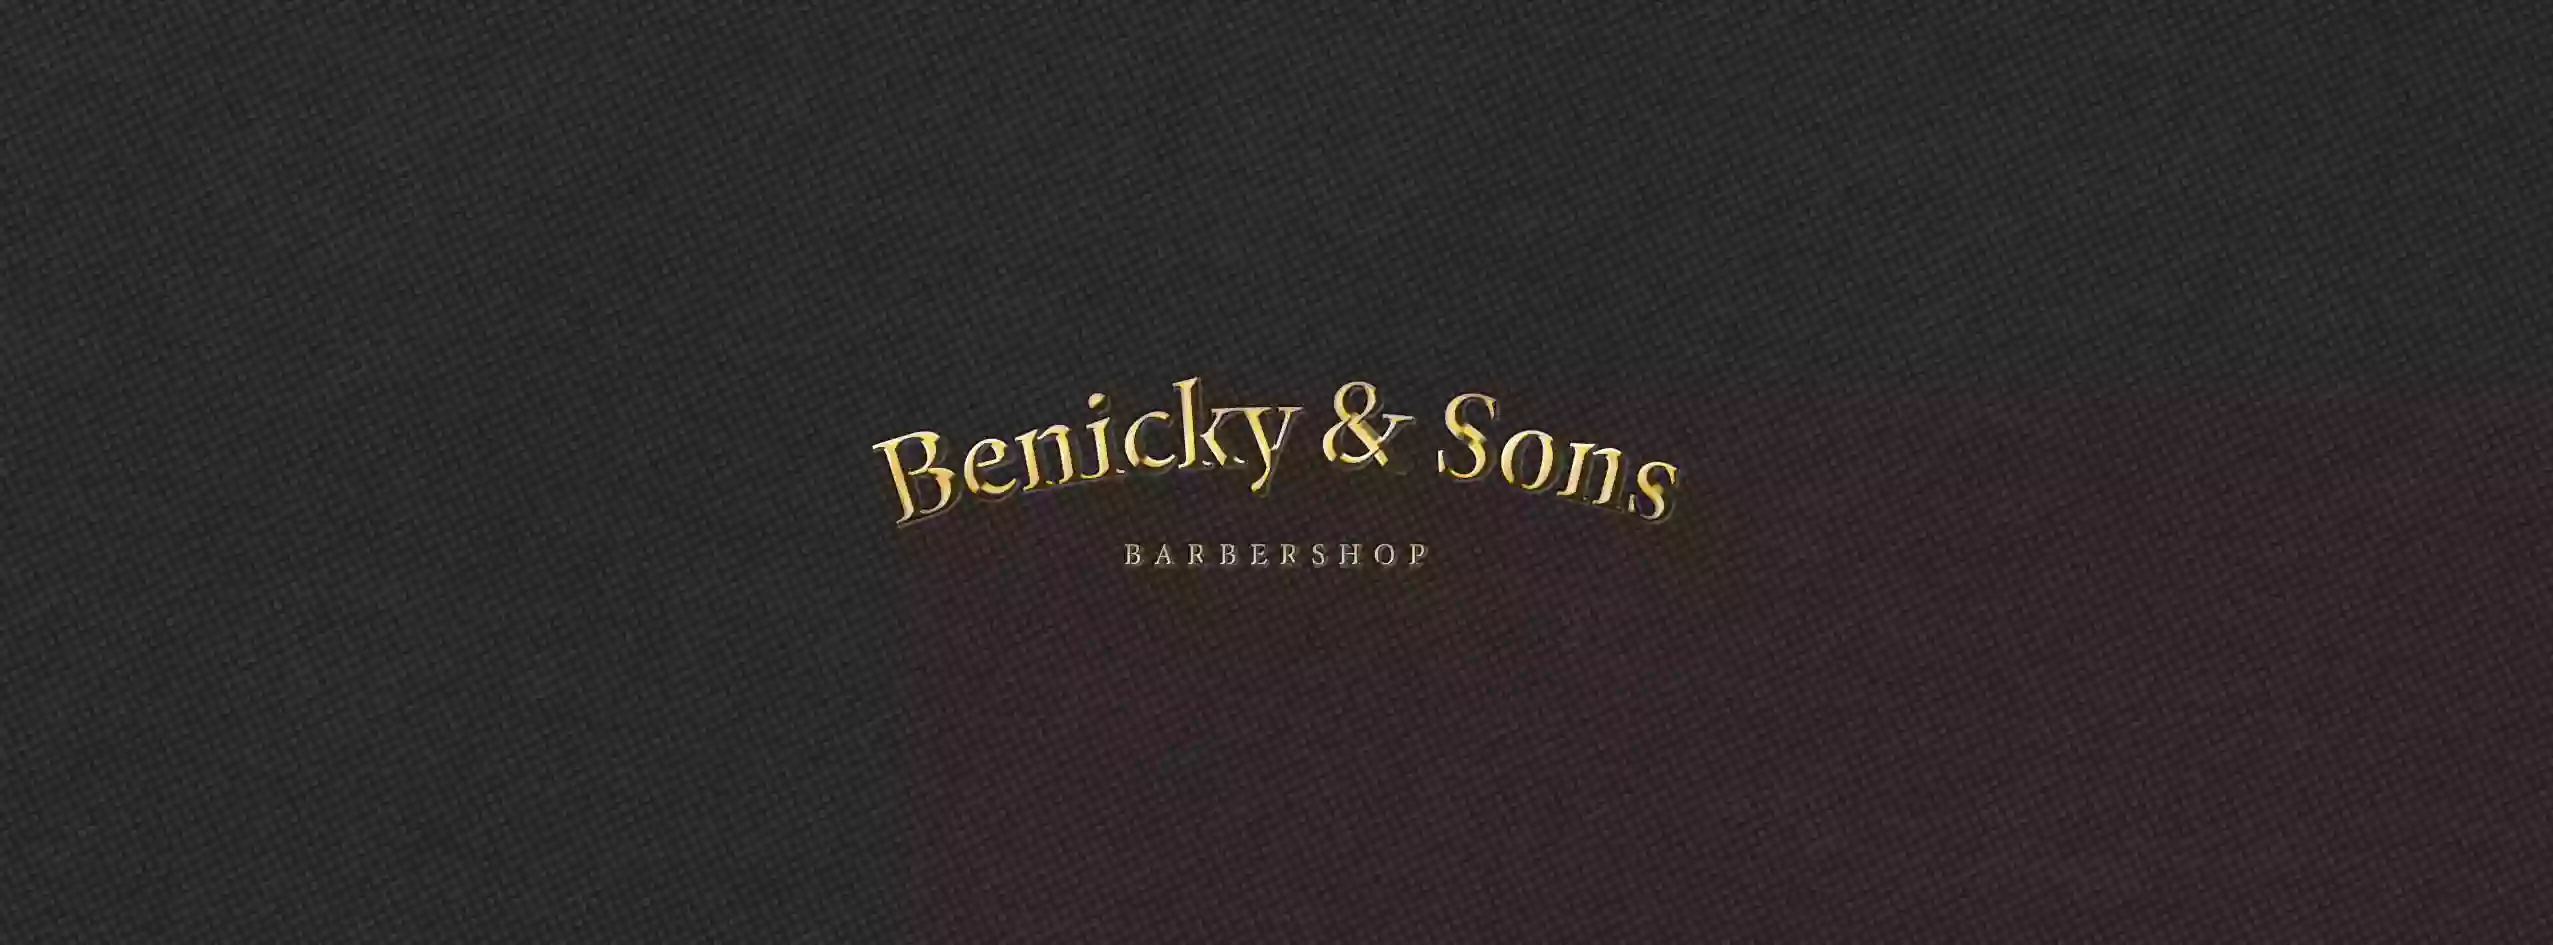 Benicky & Sons Barbershop